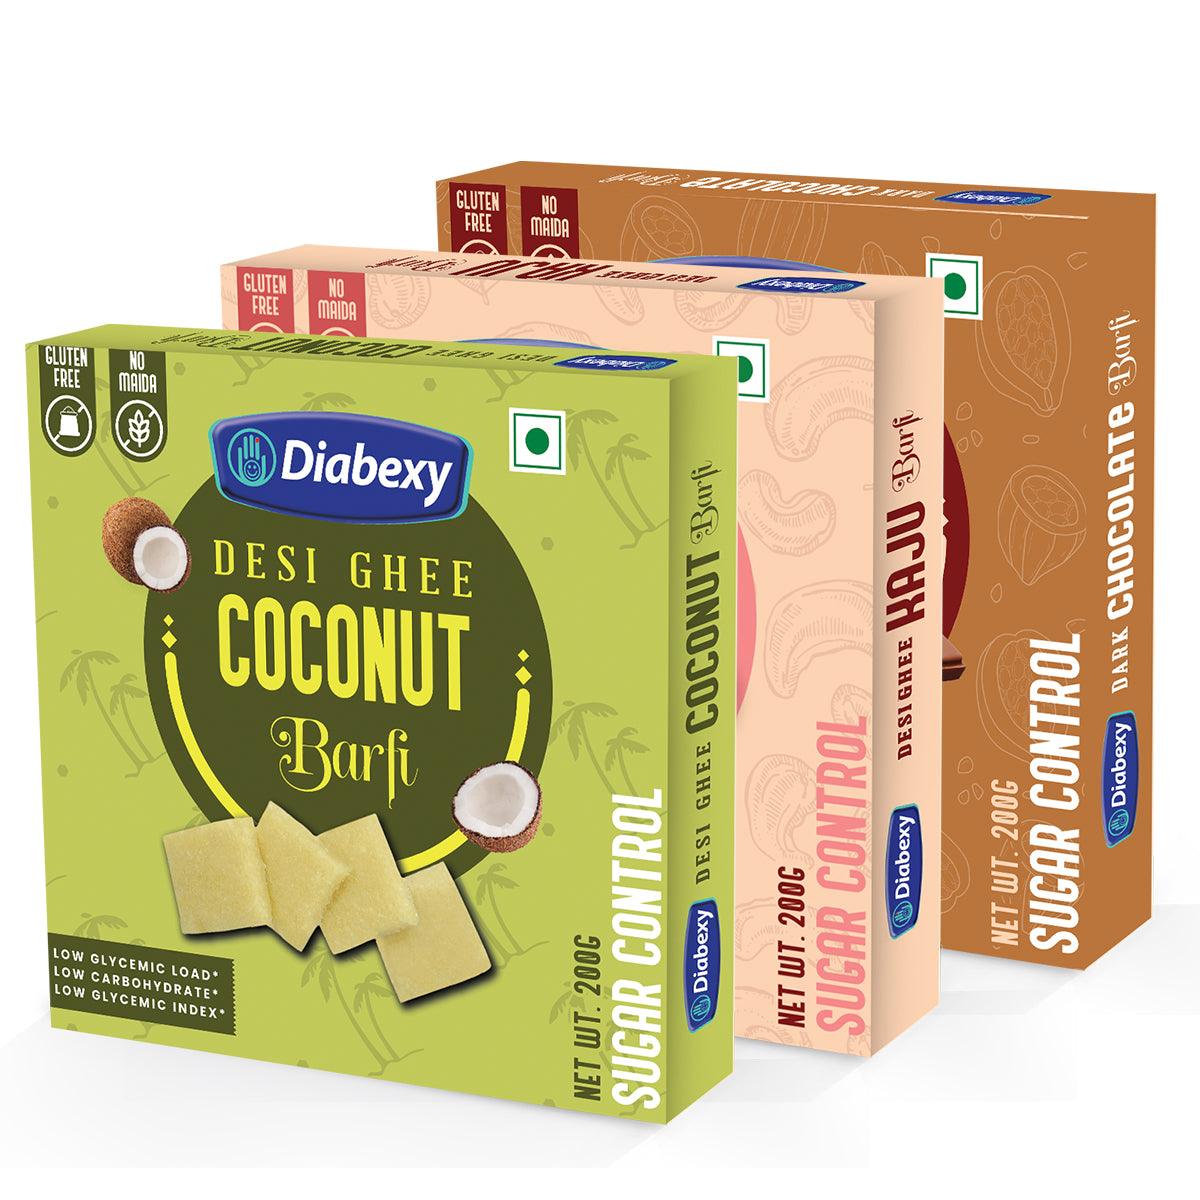 Diabexy Desi Ghee Barfi Combo (Coconut, Kaju & Dark Chocolate) 200 gm Each - Diabexy